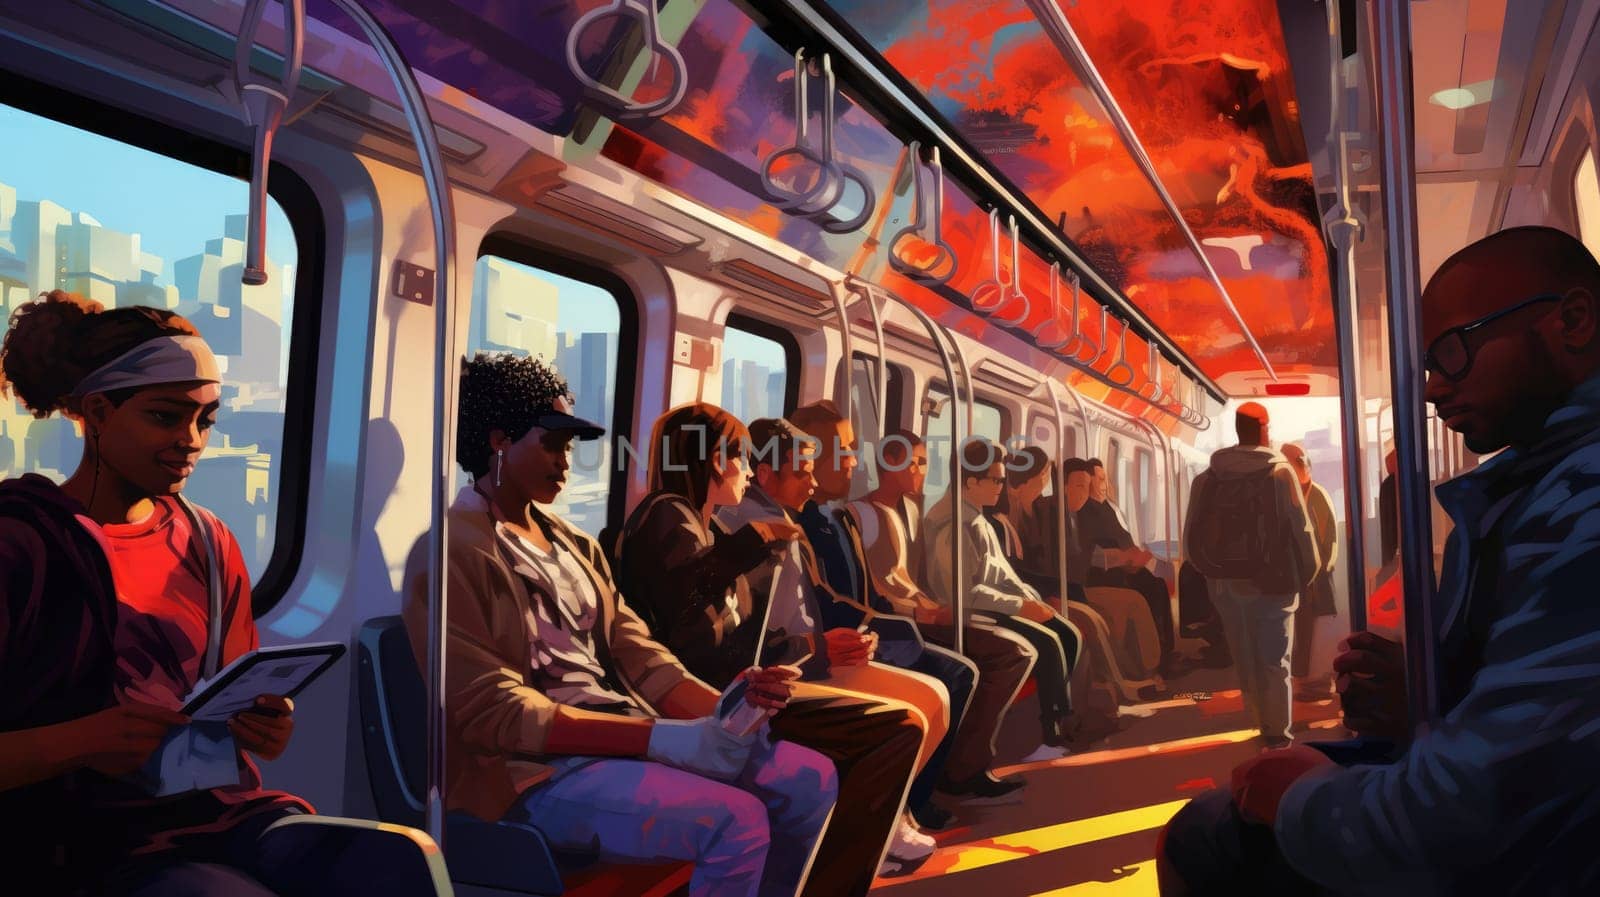 Public transportation watercolor illustration - AI generated. People, carriage, transport, windows.